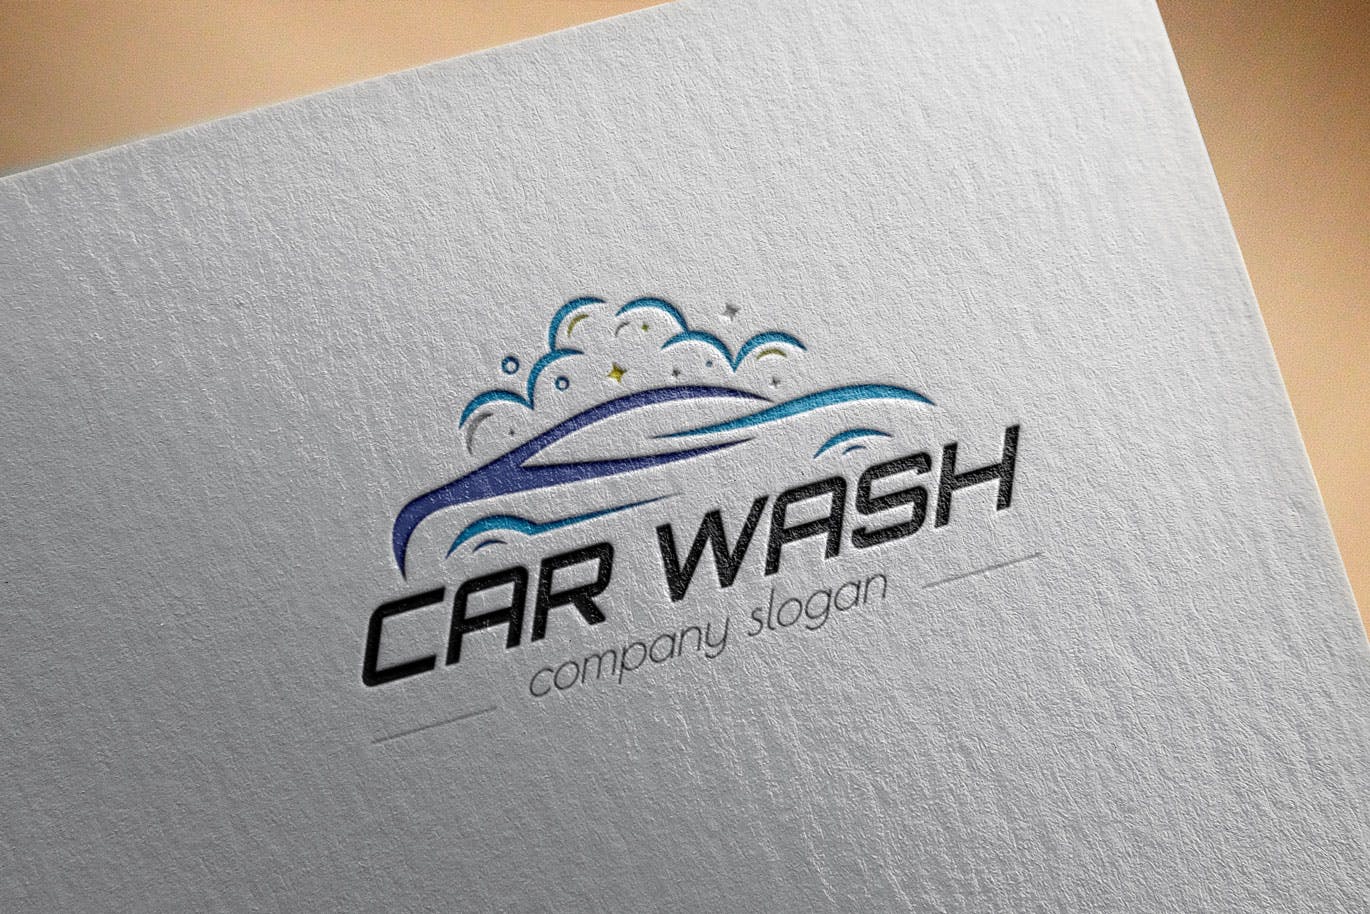 洗车店品牌Logo设计16图库精选模板 Car Wash Business Logo Template插图(2)